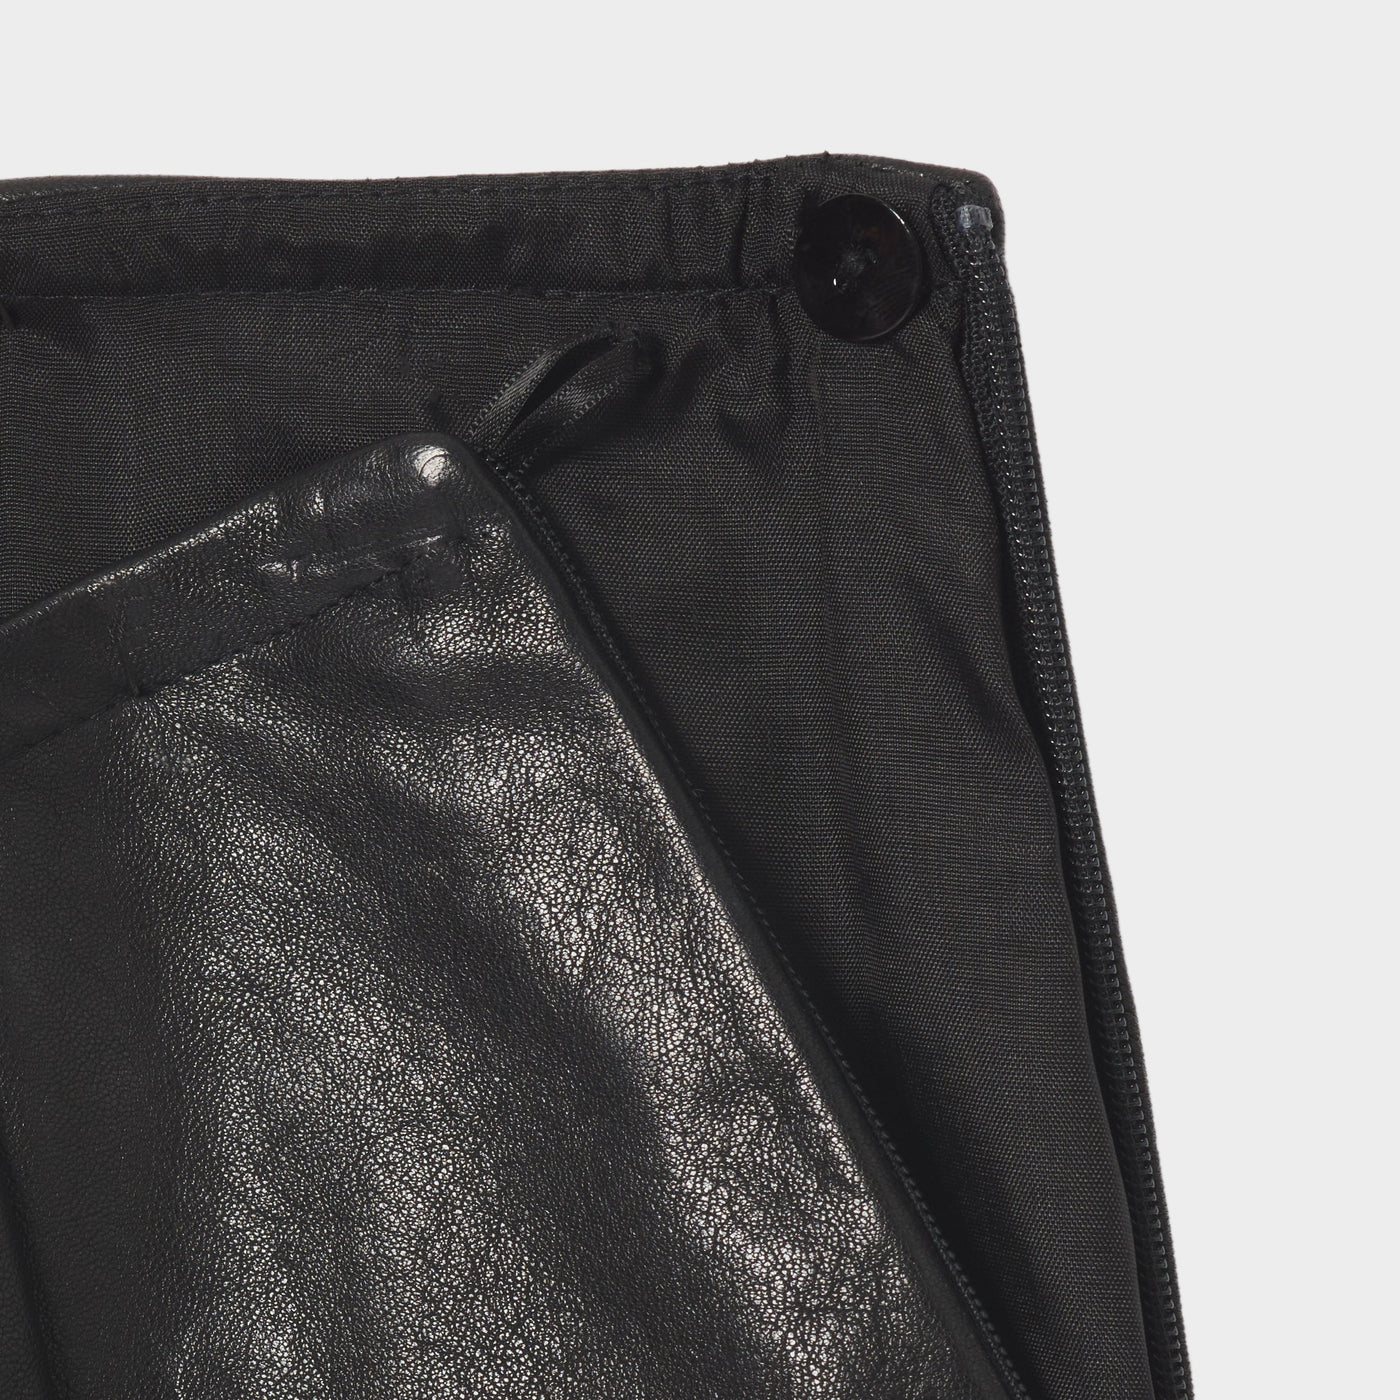 Liapure Atelier - Nappa Leather Mini Skirt